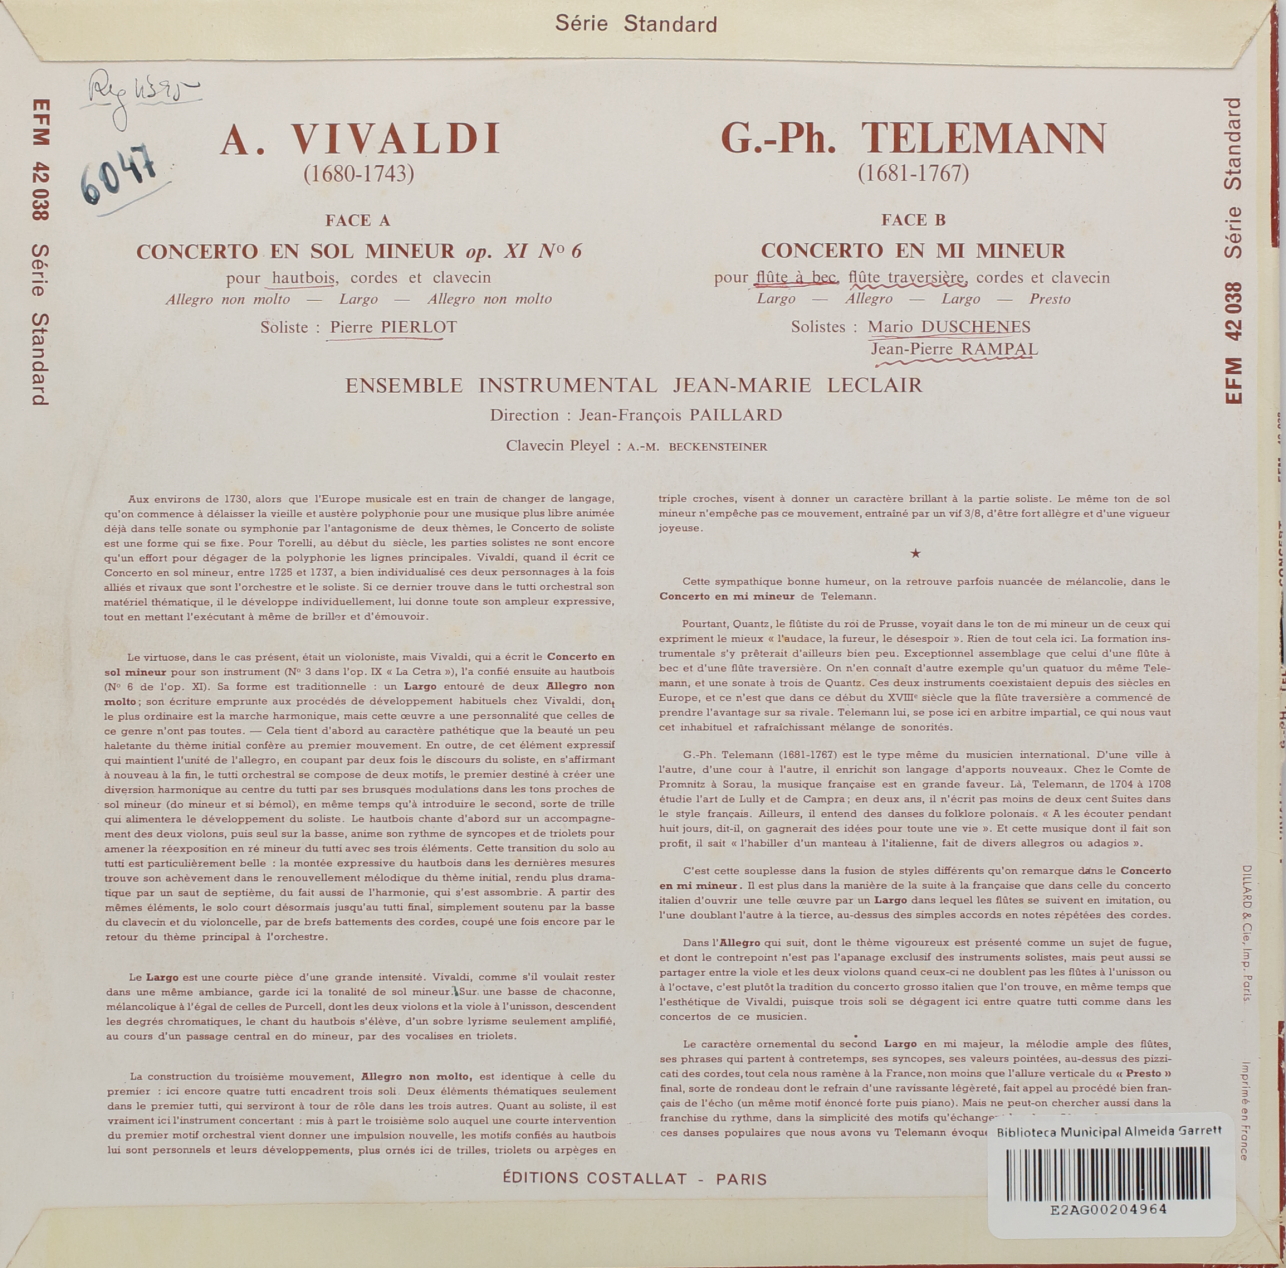 Vivaldi: Concerto en Sol mineur op. XI Nº 6 / Telemann: Concerto en Mi mineur